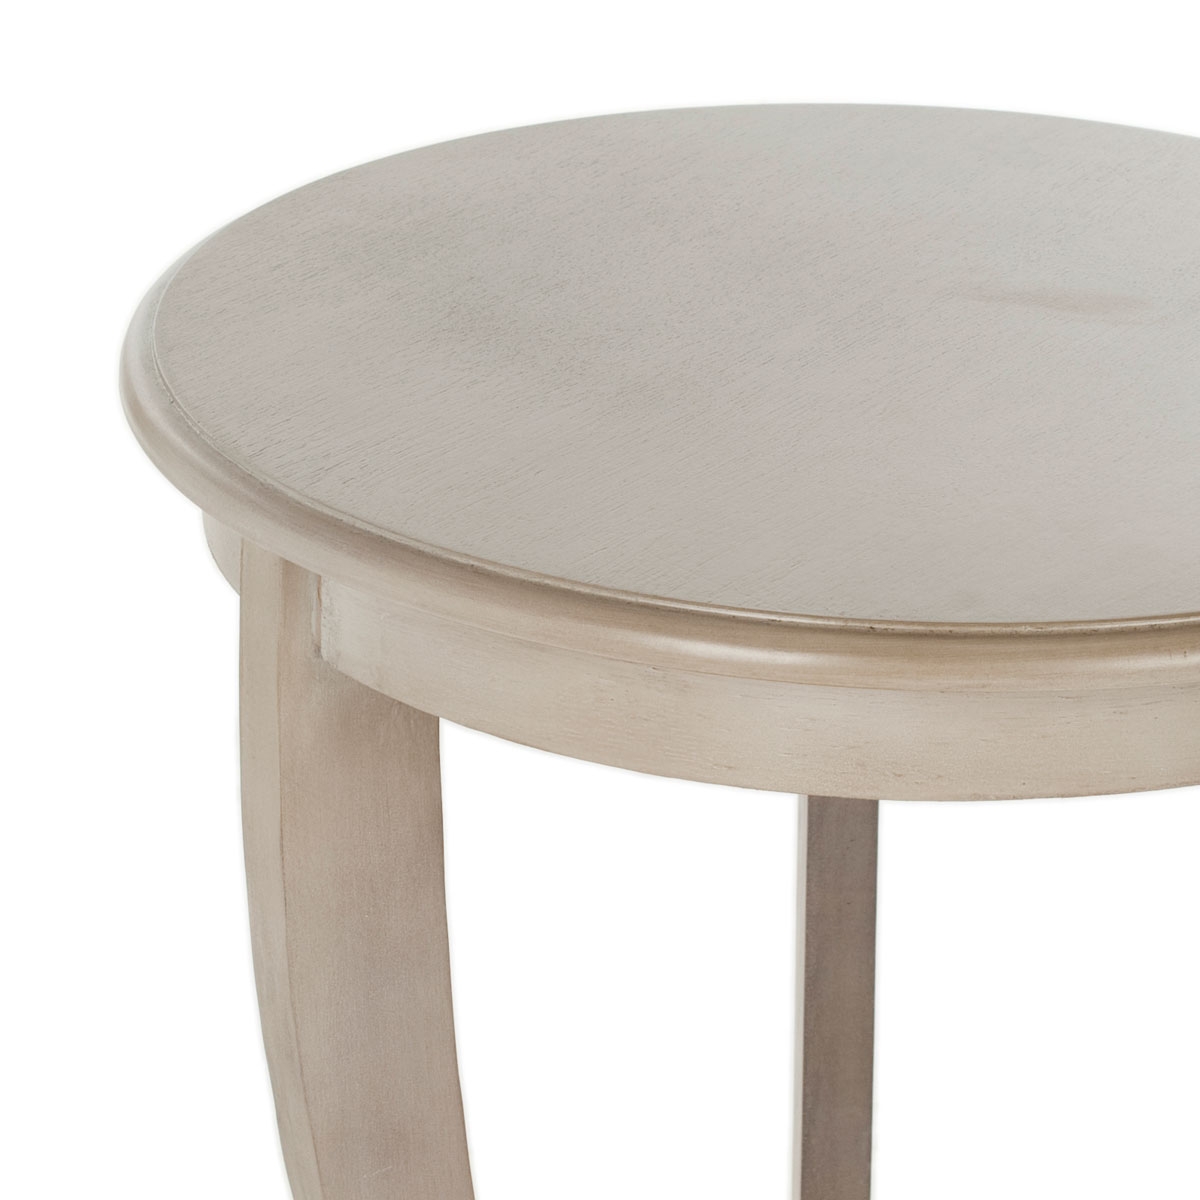 Mary Pedestal Side Table - Vintage Grey - Safavieh - Image 1